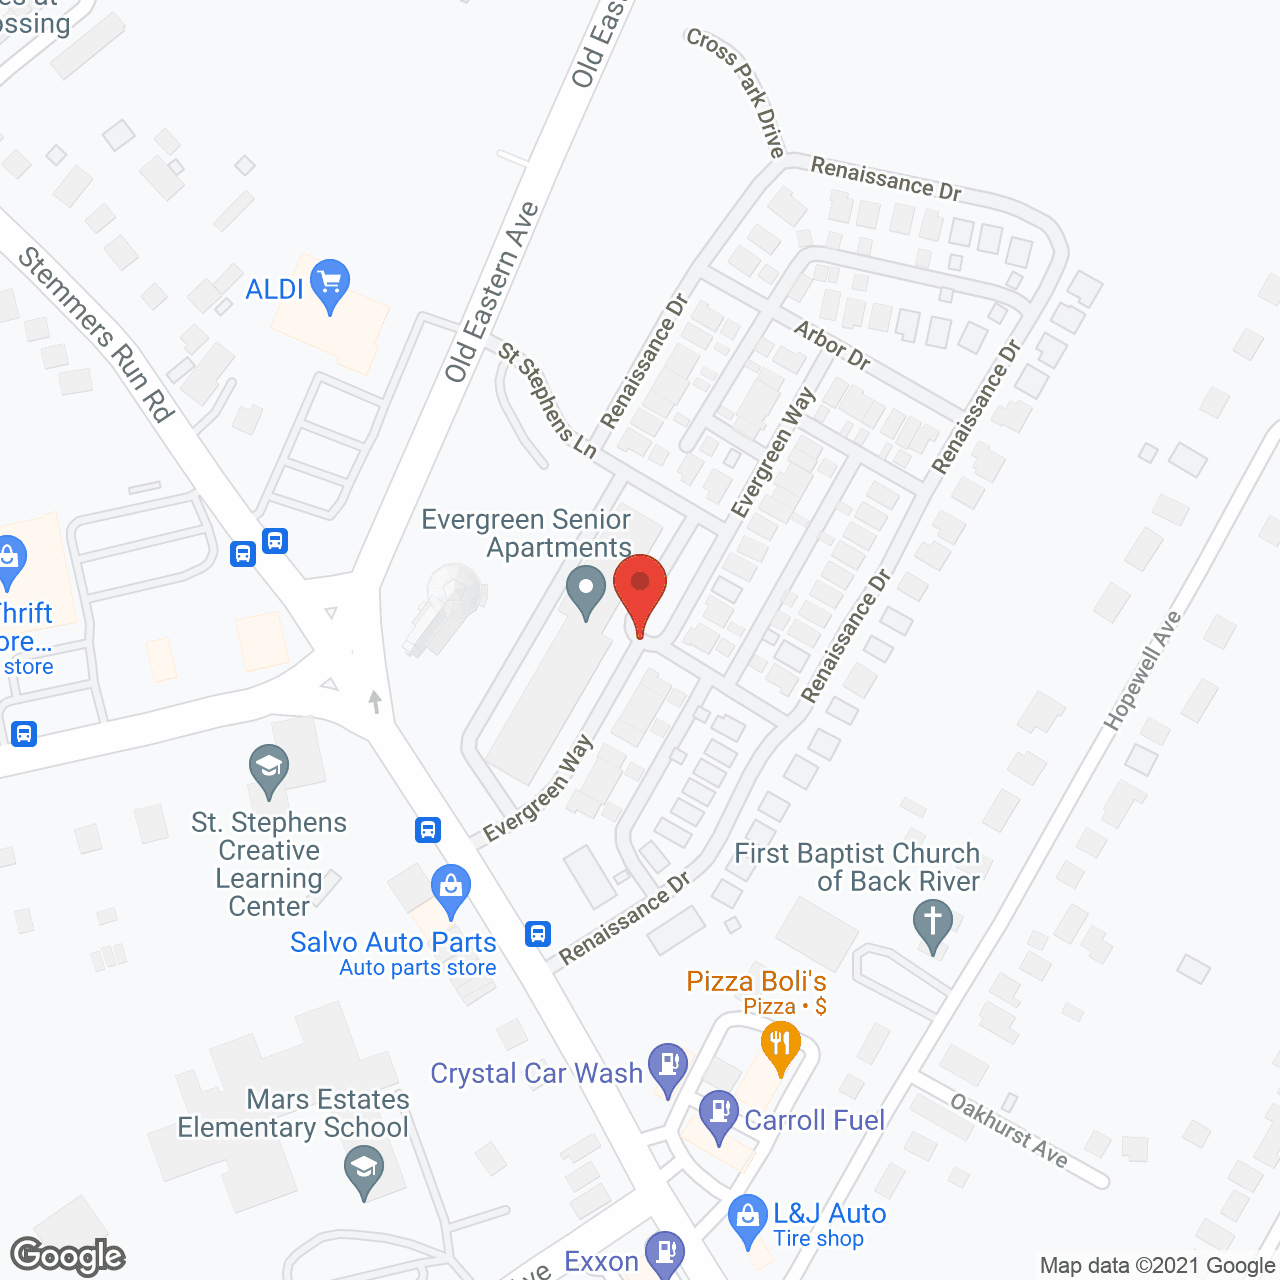 Evergreen Senior Apartments in google map